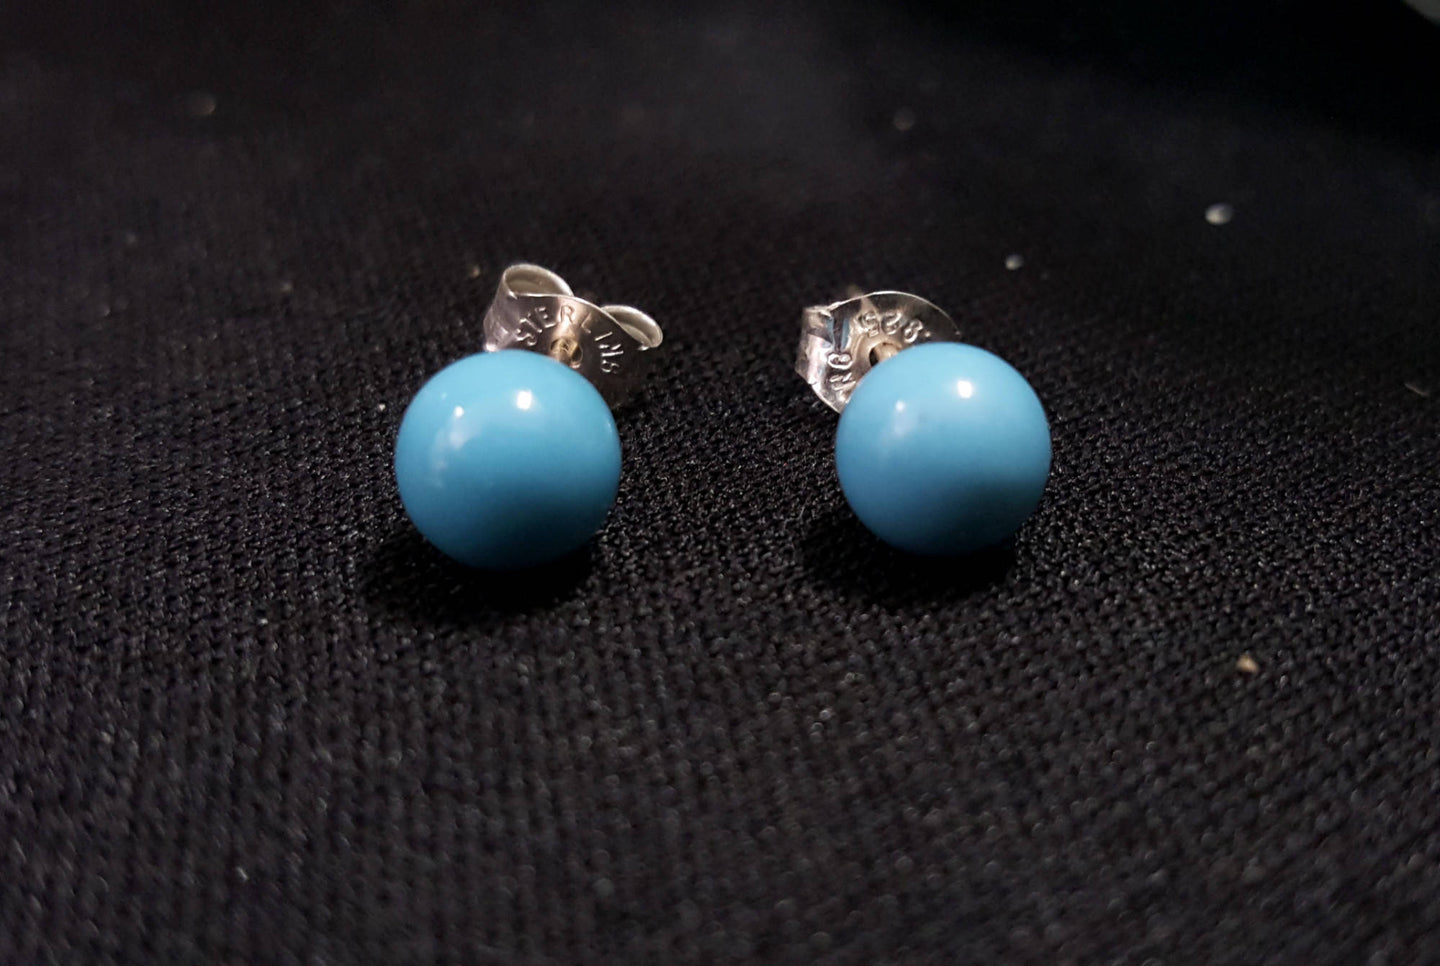 6 mm stone - sleeping beauty turquoise stud earrings - sterling silver